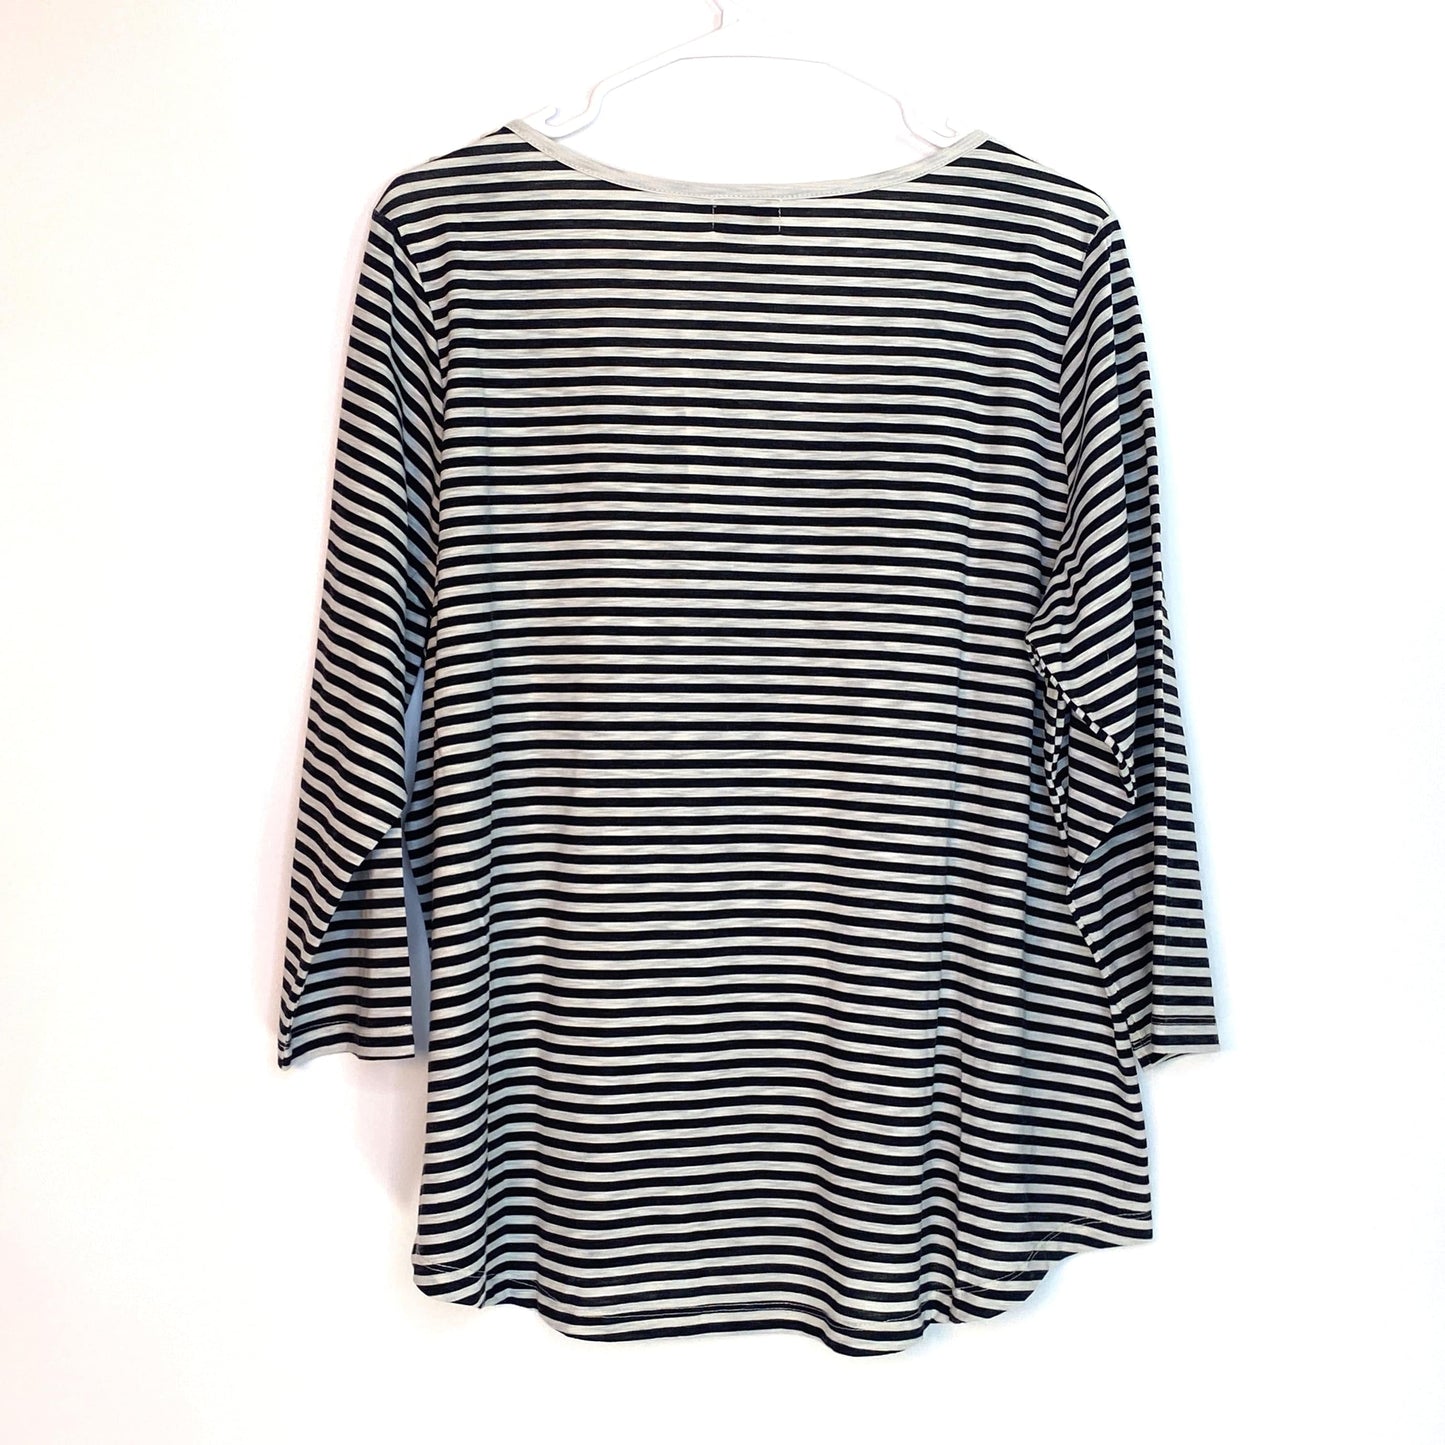 Melrose Chic Womens Size 1X Black White Stripe Crocheted Collar Blouse NWT